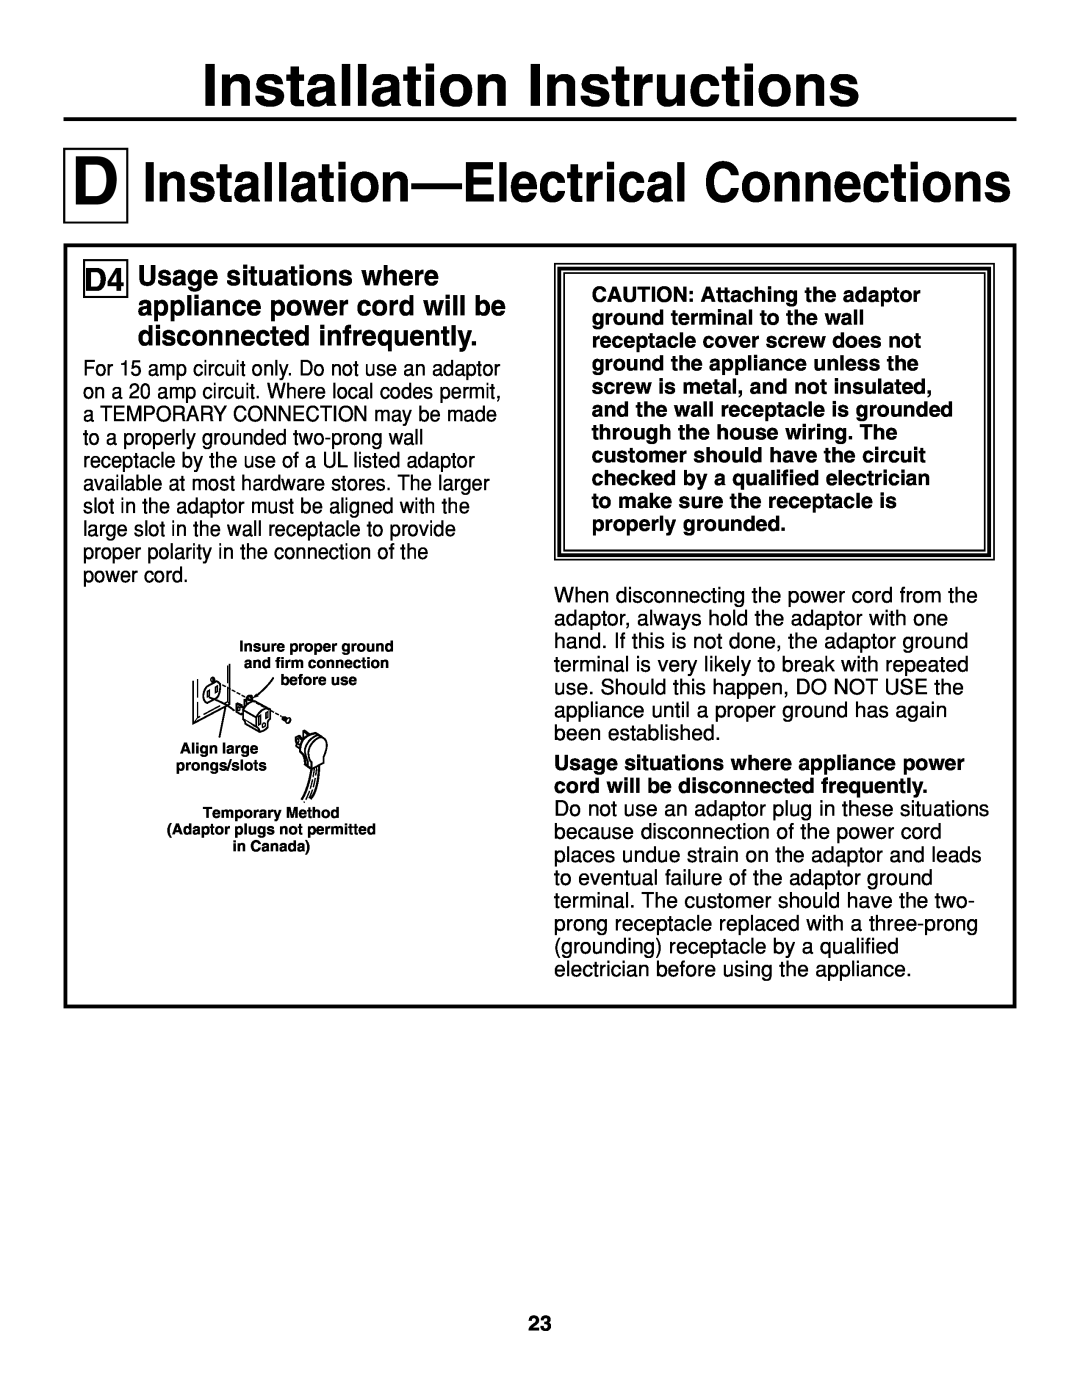 GE JGP337 operating instructions Installation Instructions, Installation-Electrical Connections, in Canada 